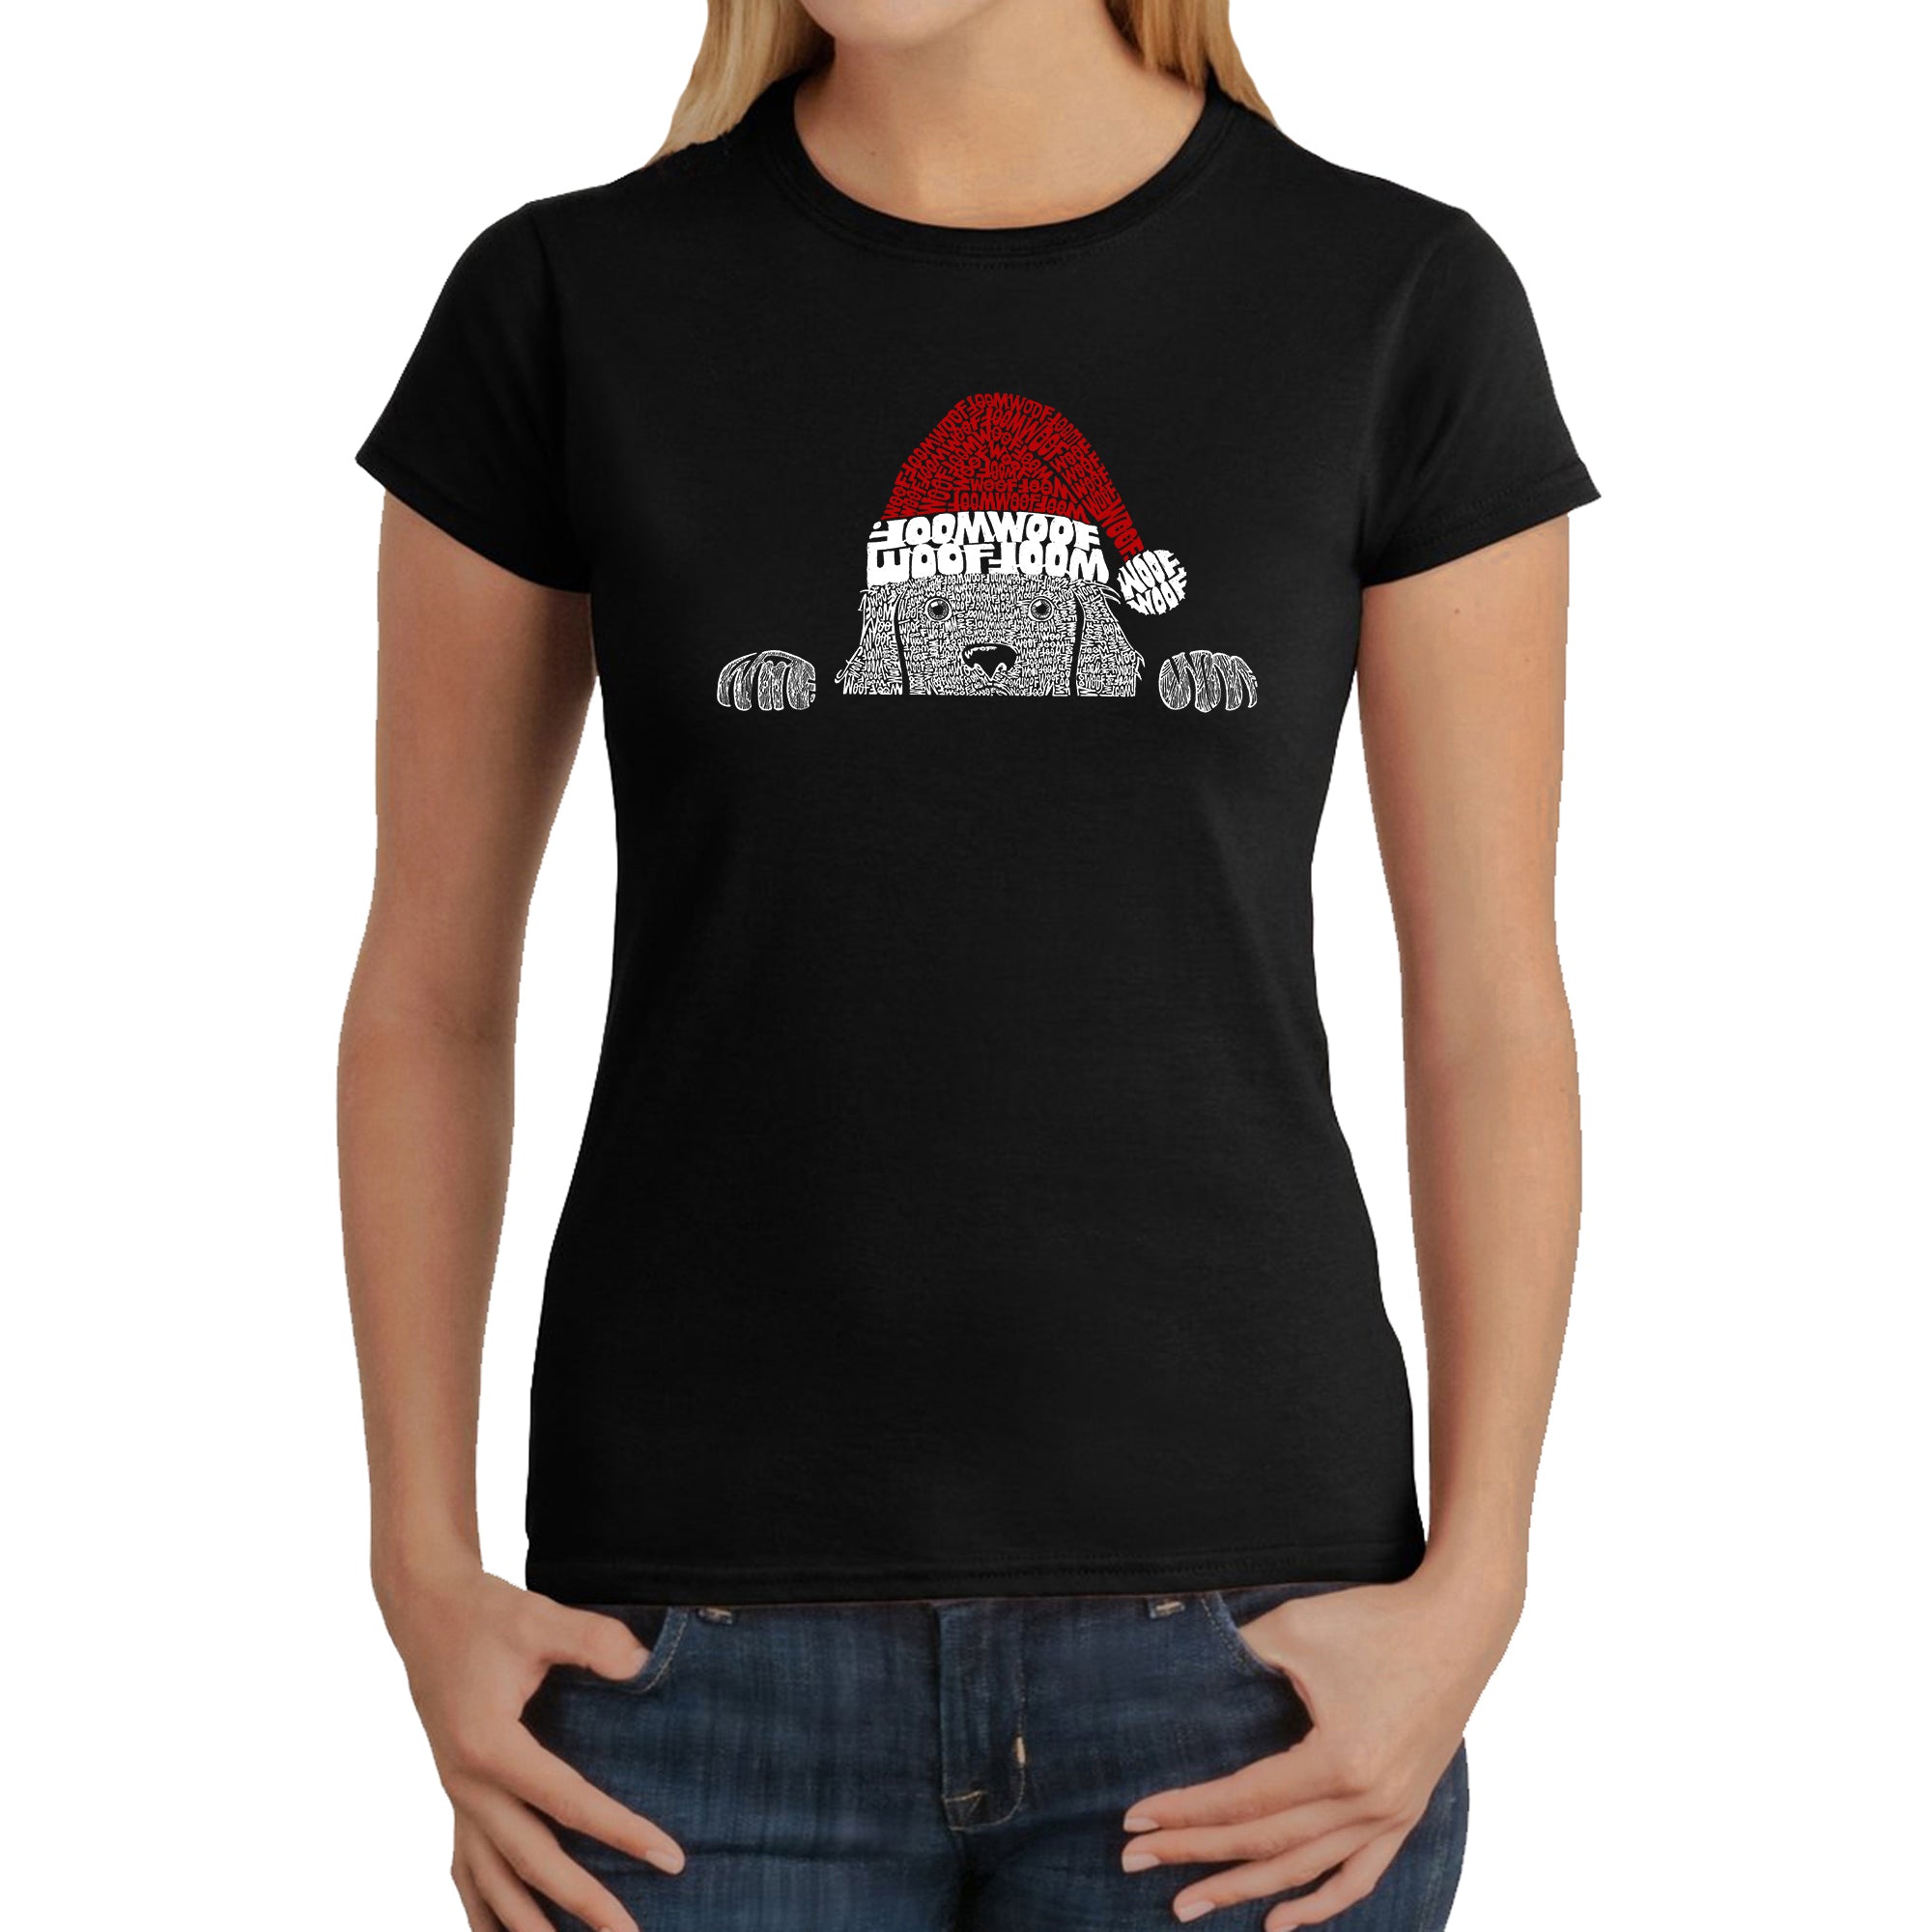 Christmas Peeking Dog - Women's Word Art T-Shirt - Red - X-Large